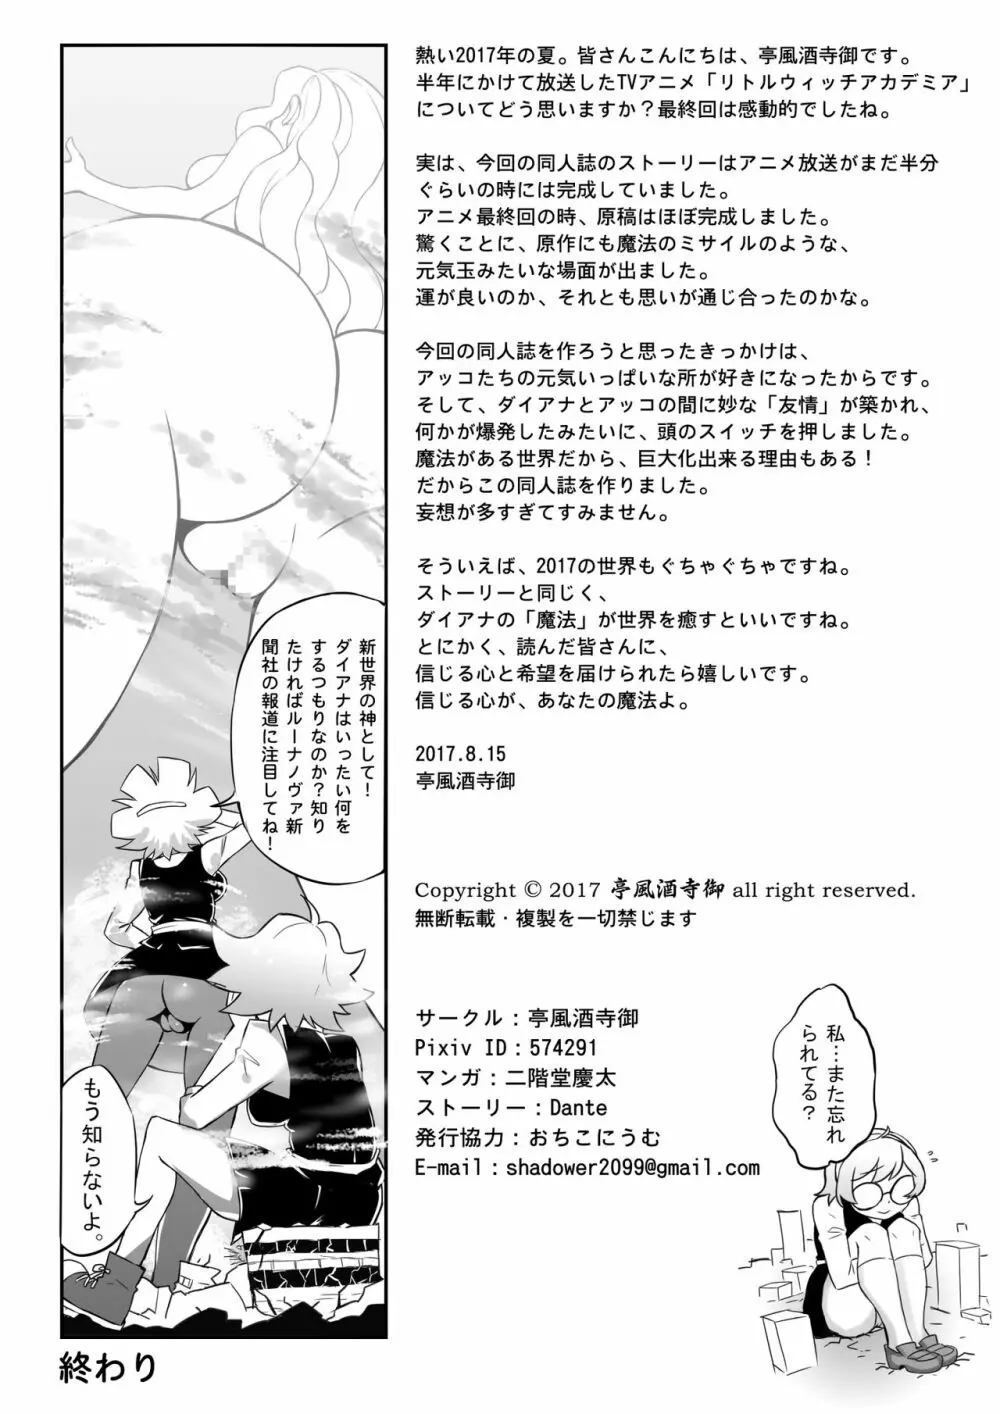 巨大魔女注意報 - page22